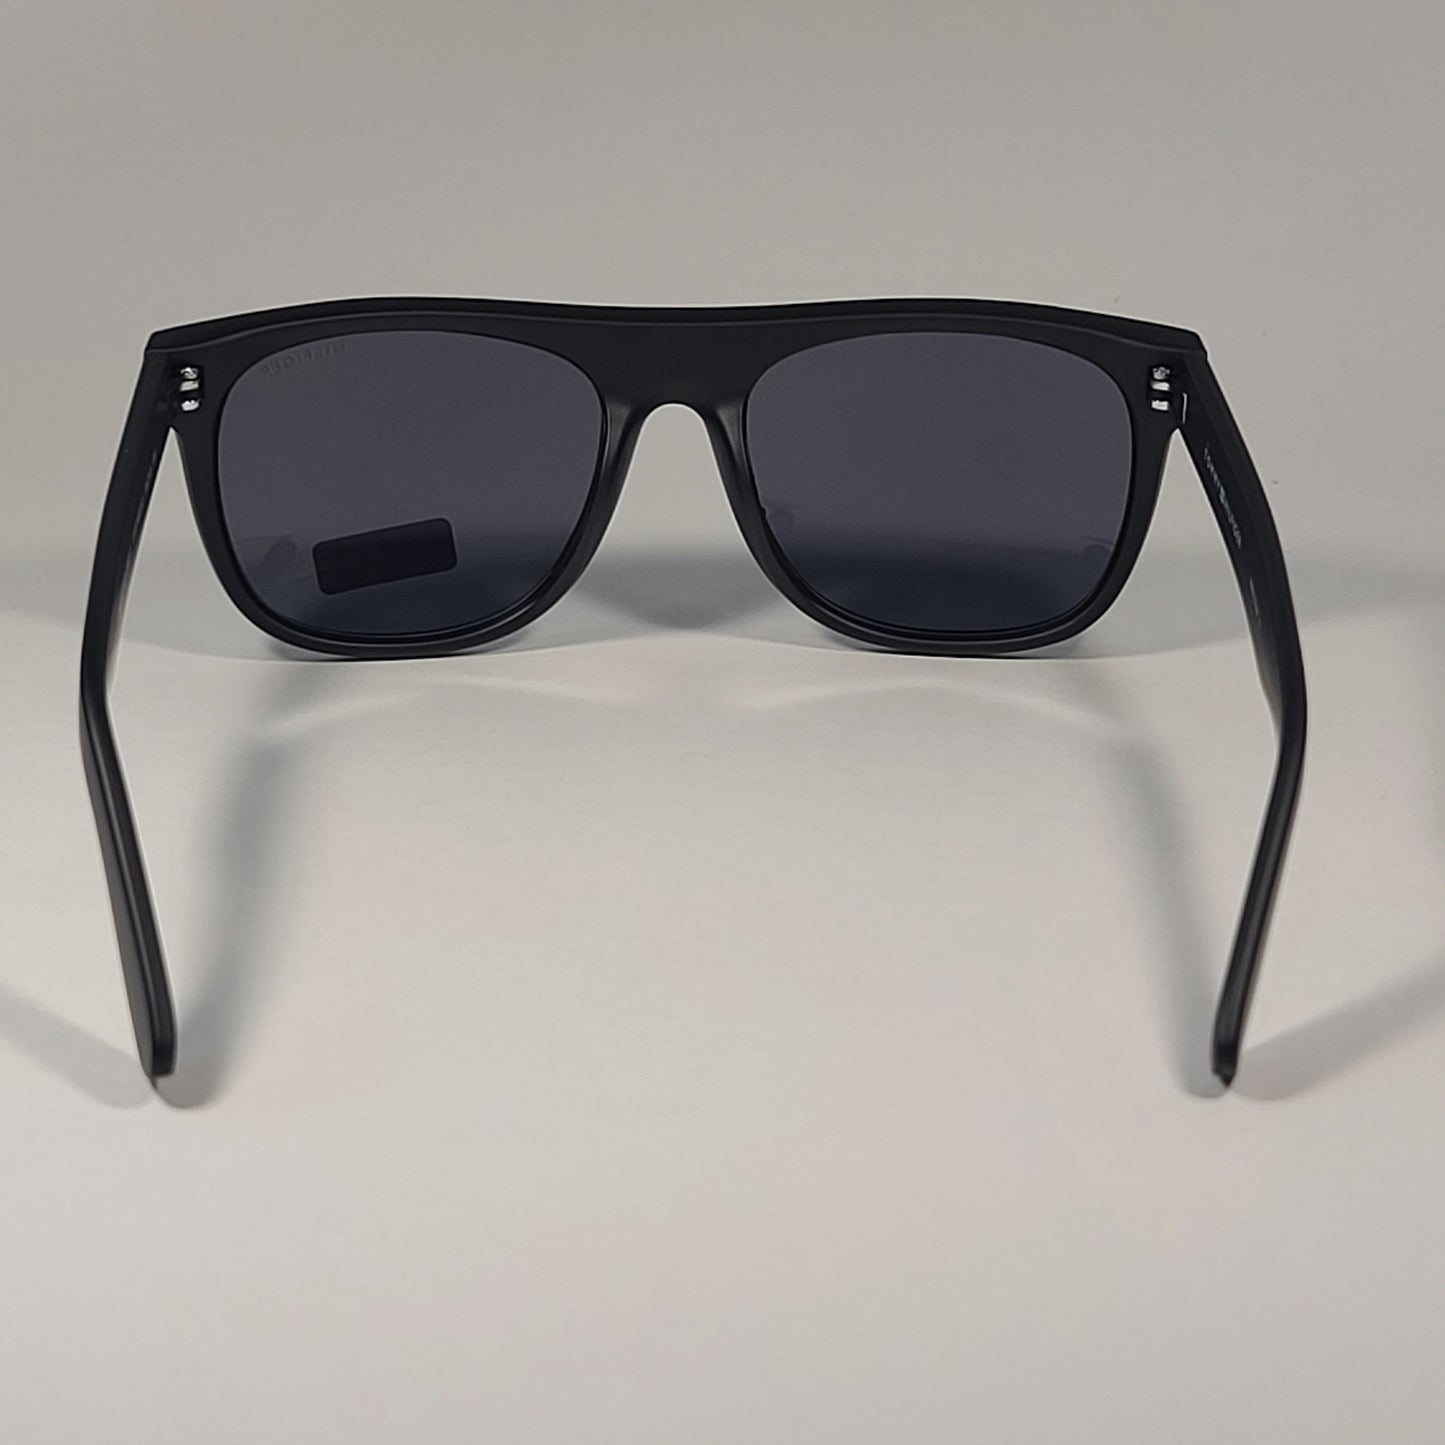 Tommy Hilfiger Drake MP OM611 Square Sunglasses Matte Black Gray Tinted Lens - Sunglasses